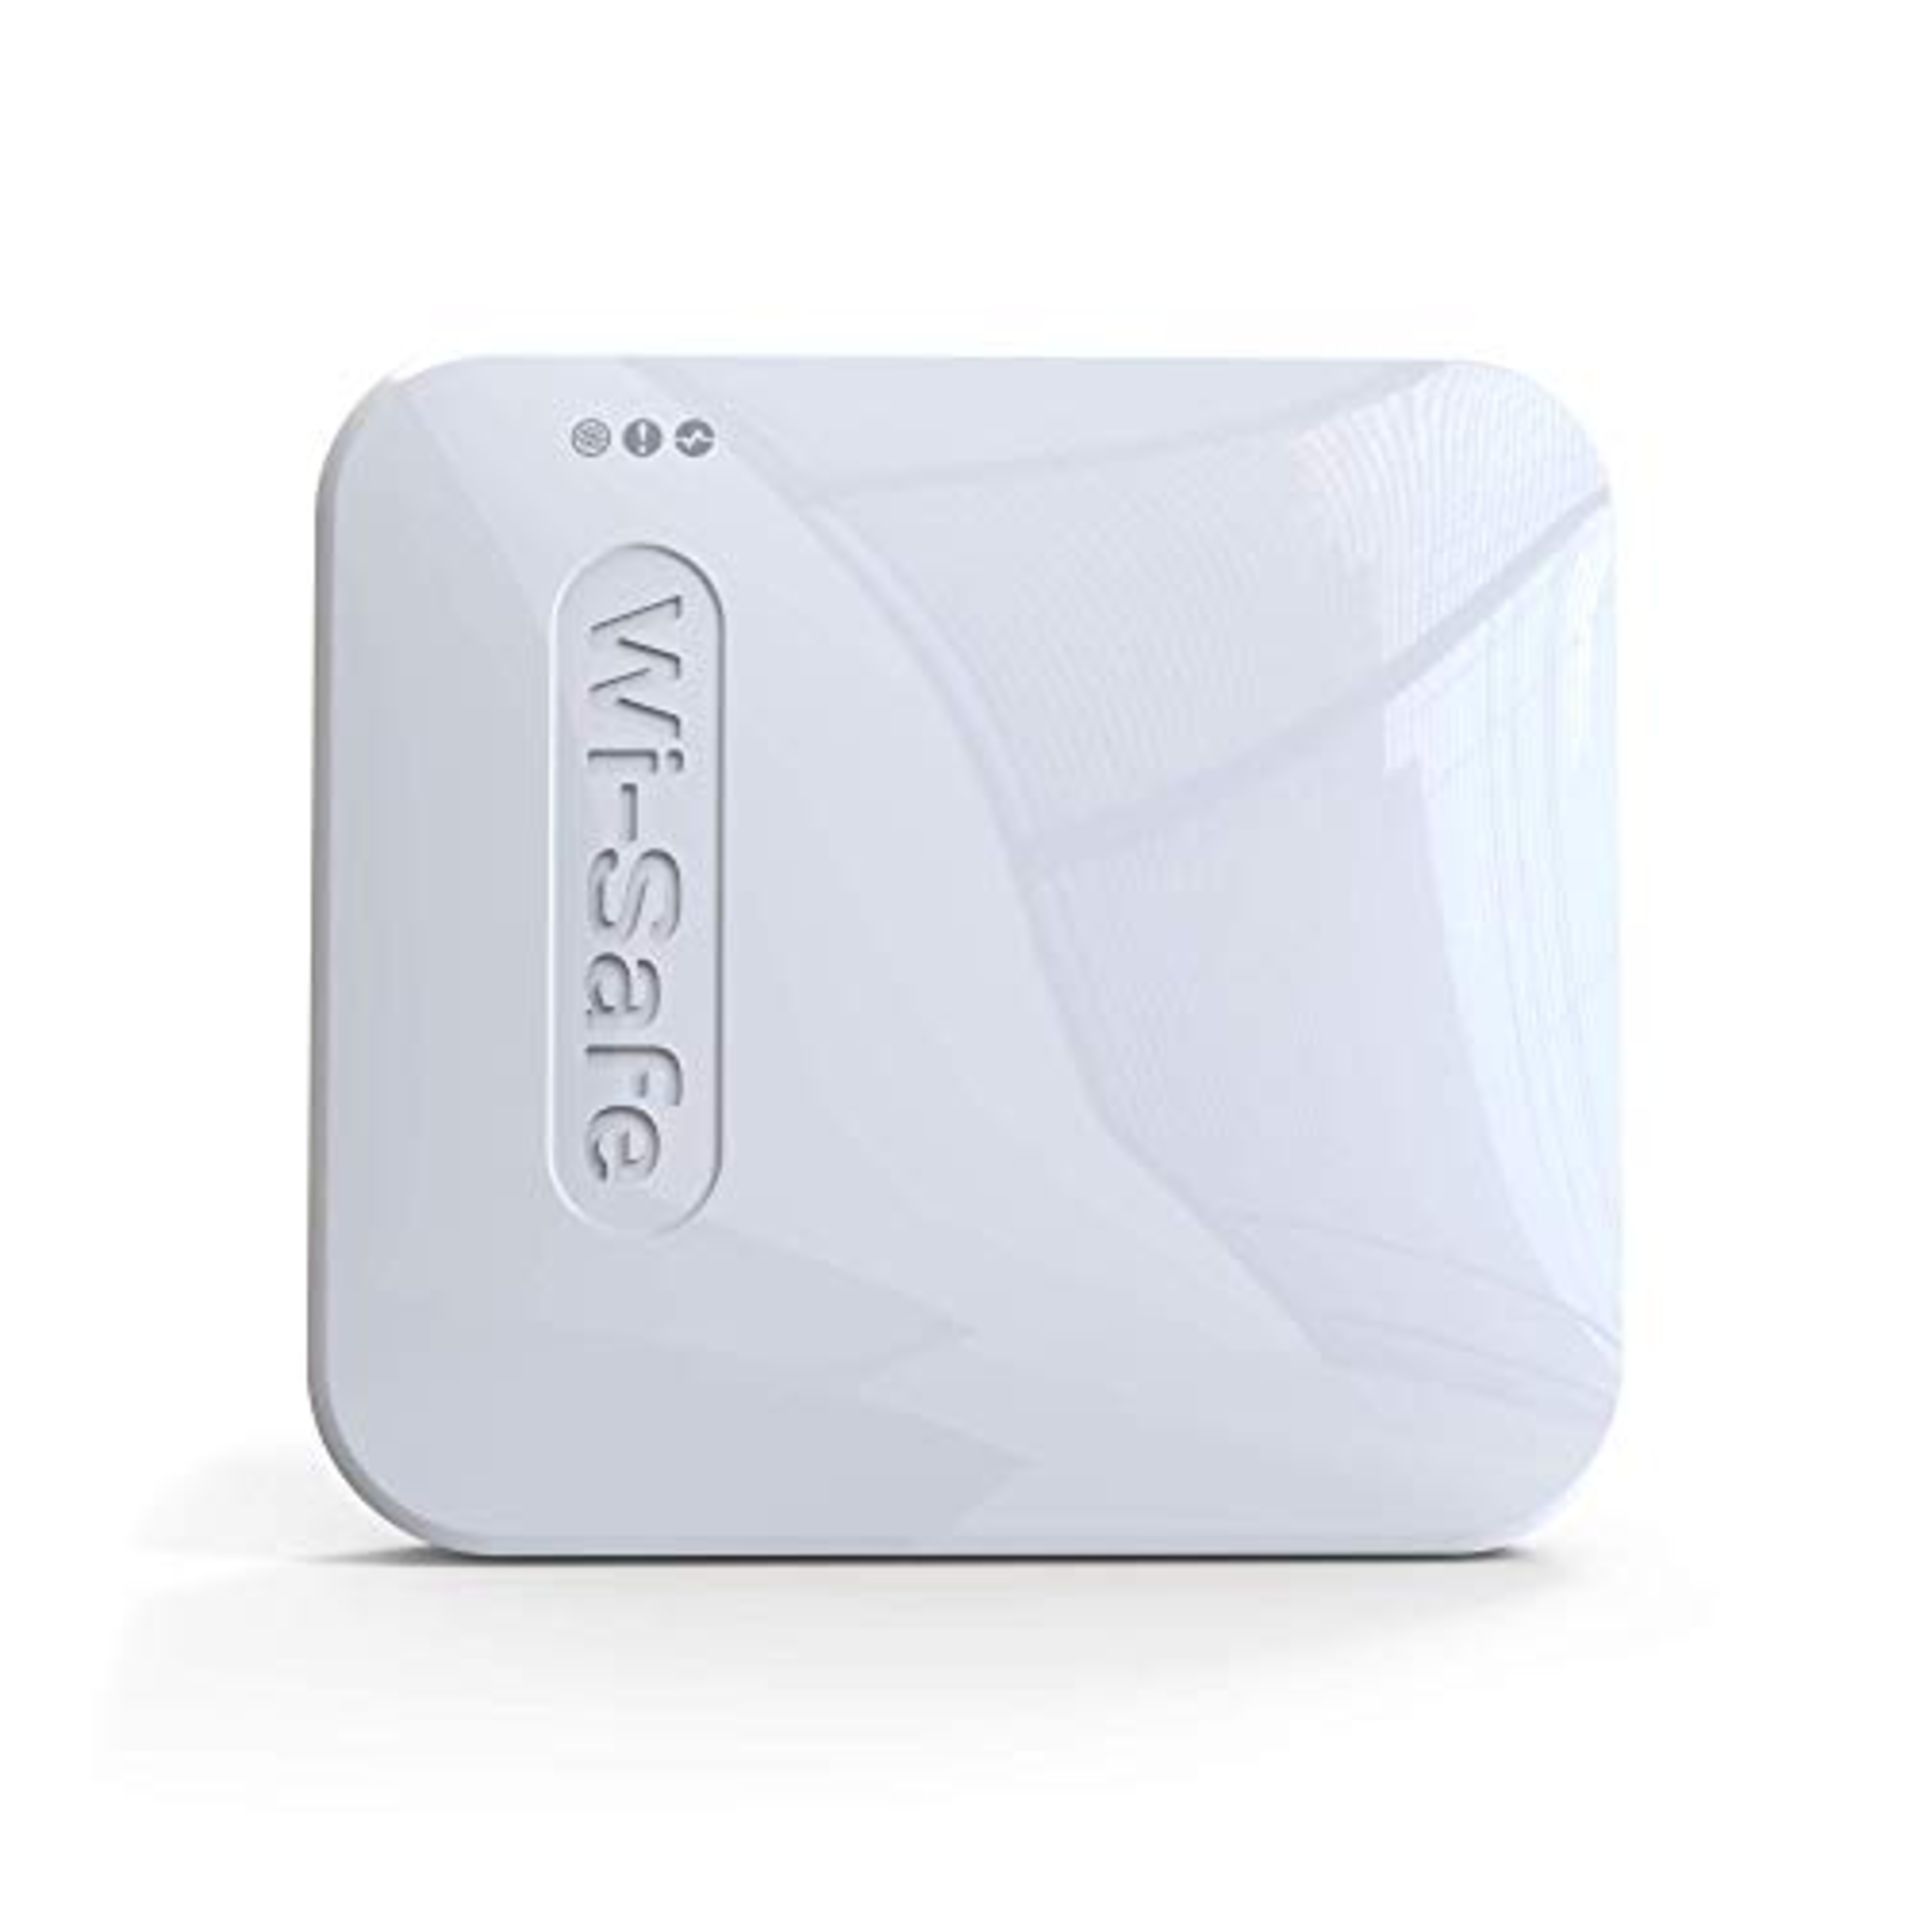 FireAngel Pro Connected Smart Gateway (Hub for Use with FireAngel Pro Connected Alarms